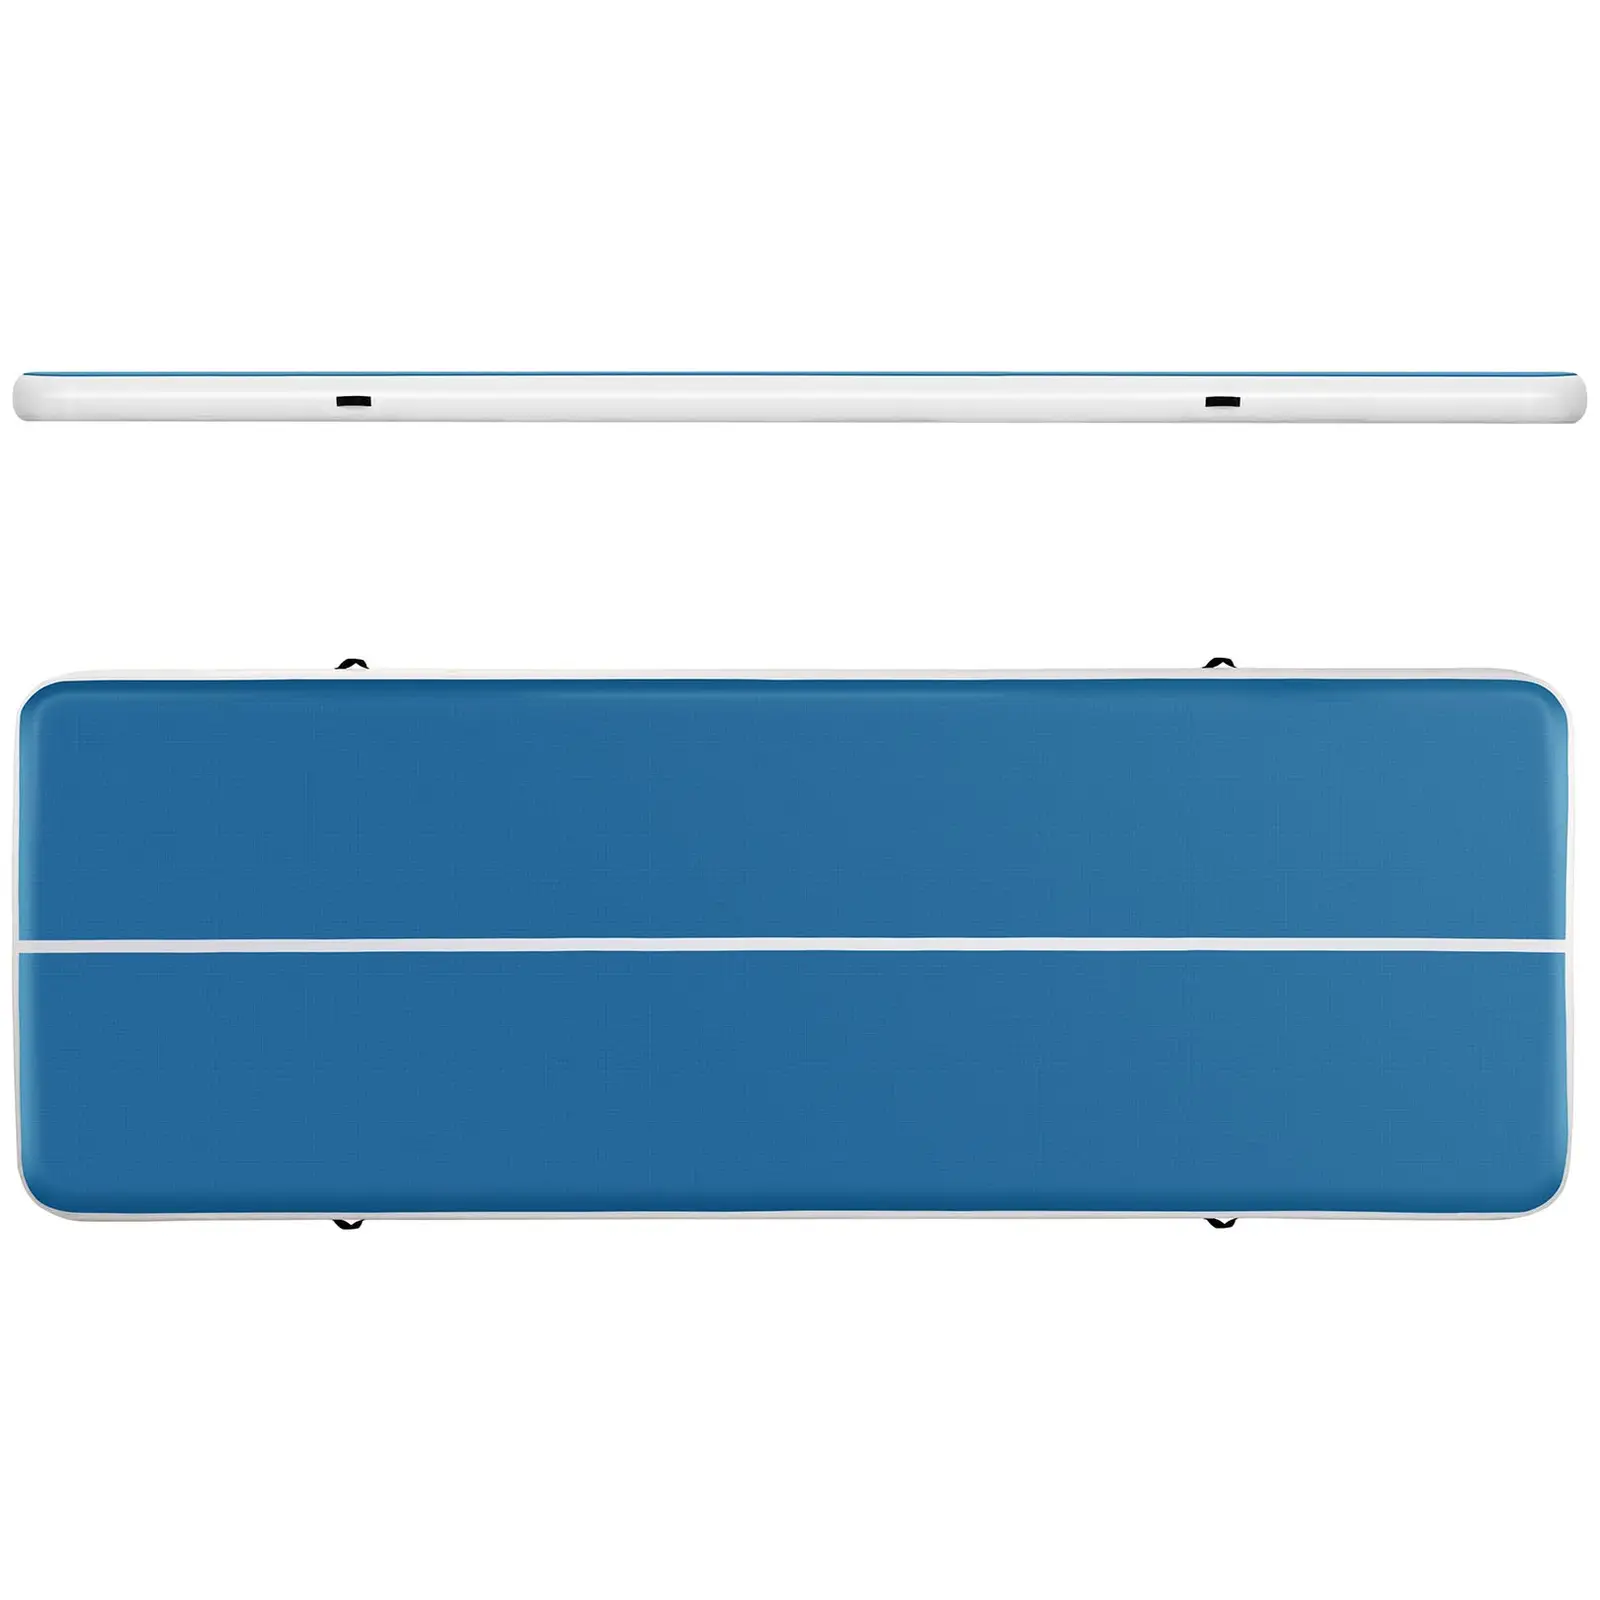 Aufblasbare Turnmatte - 600 x 200 x 20 cm - 400 kg - blau/weiß